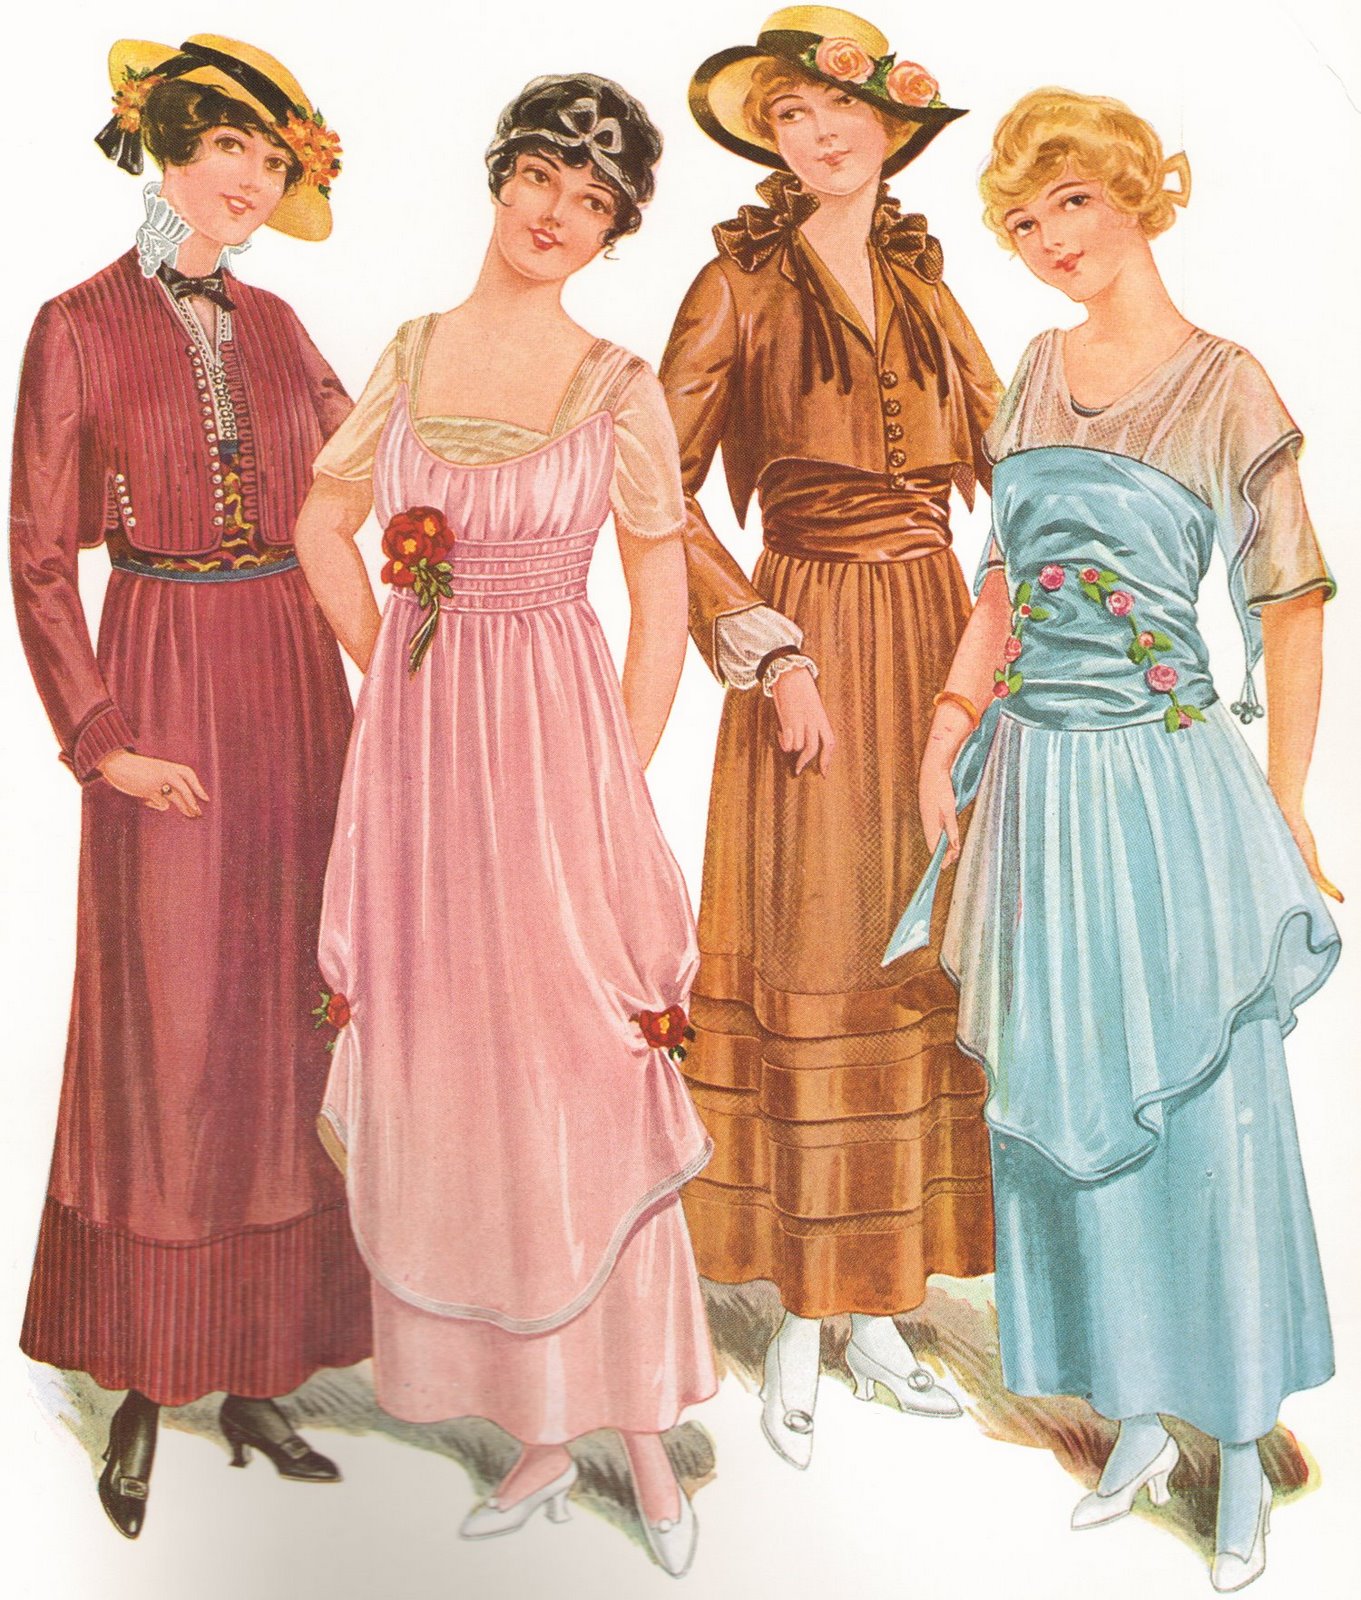 from a 1915 Gimbels fashion magazine, courtesy  the blog Historically Romantic